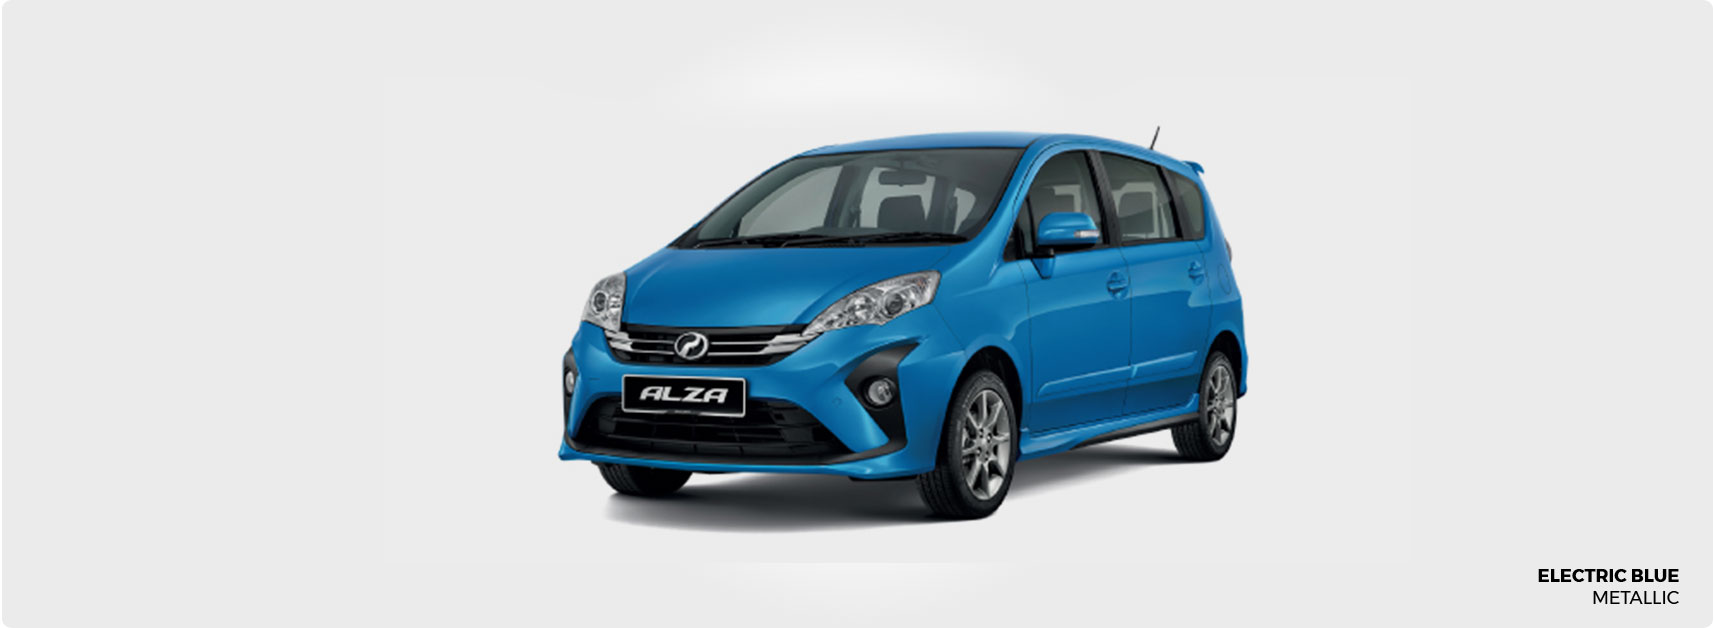 Alza - Perodua Sales Putrajaya